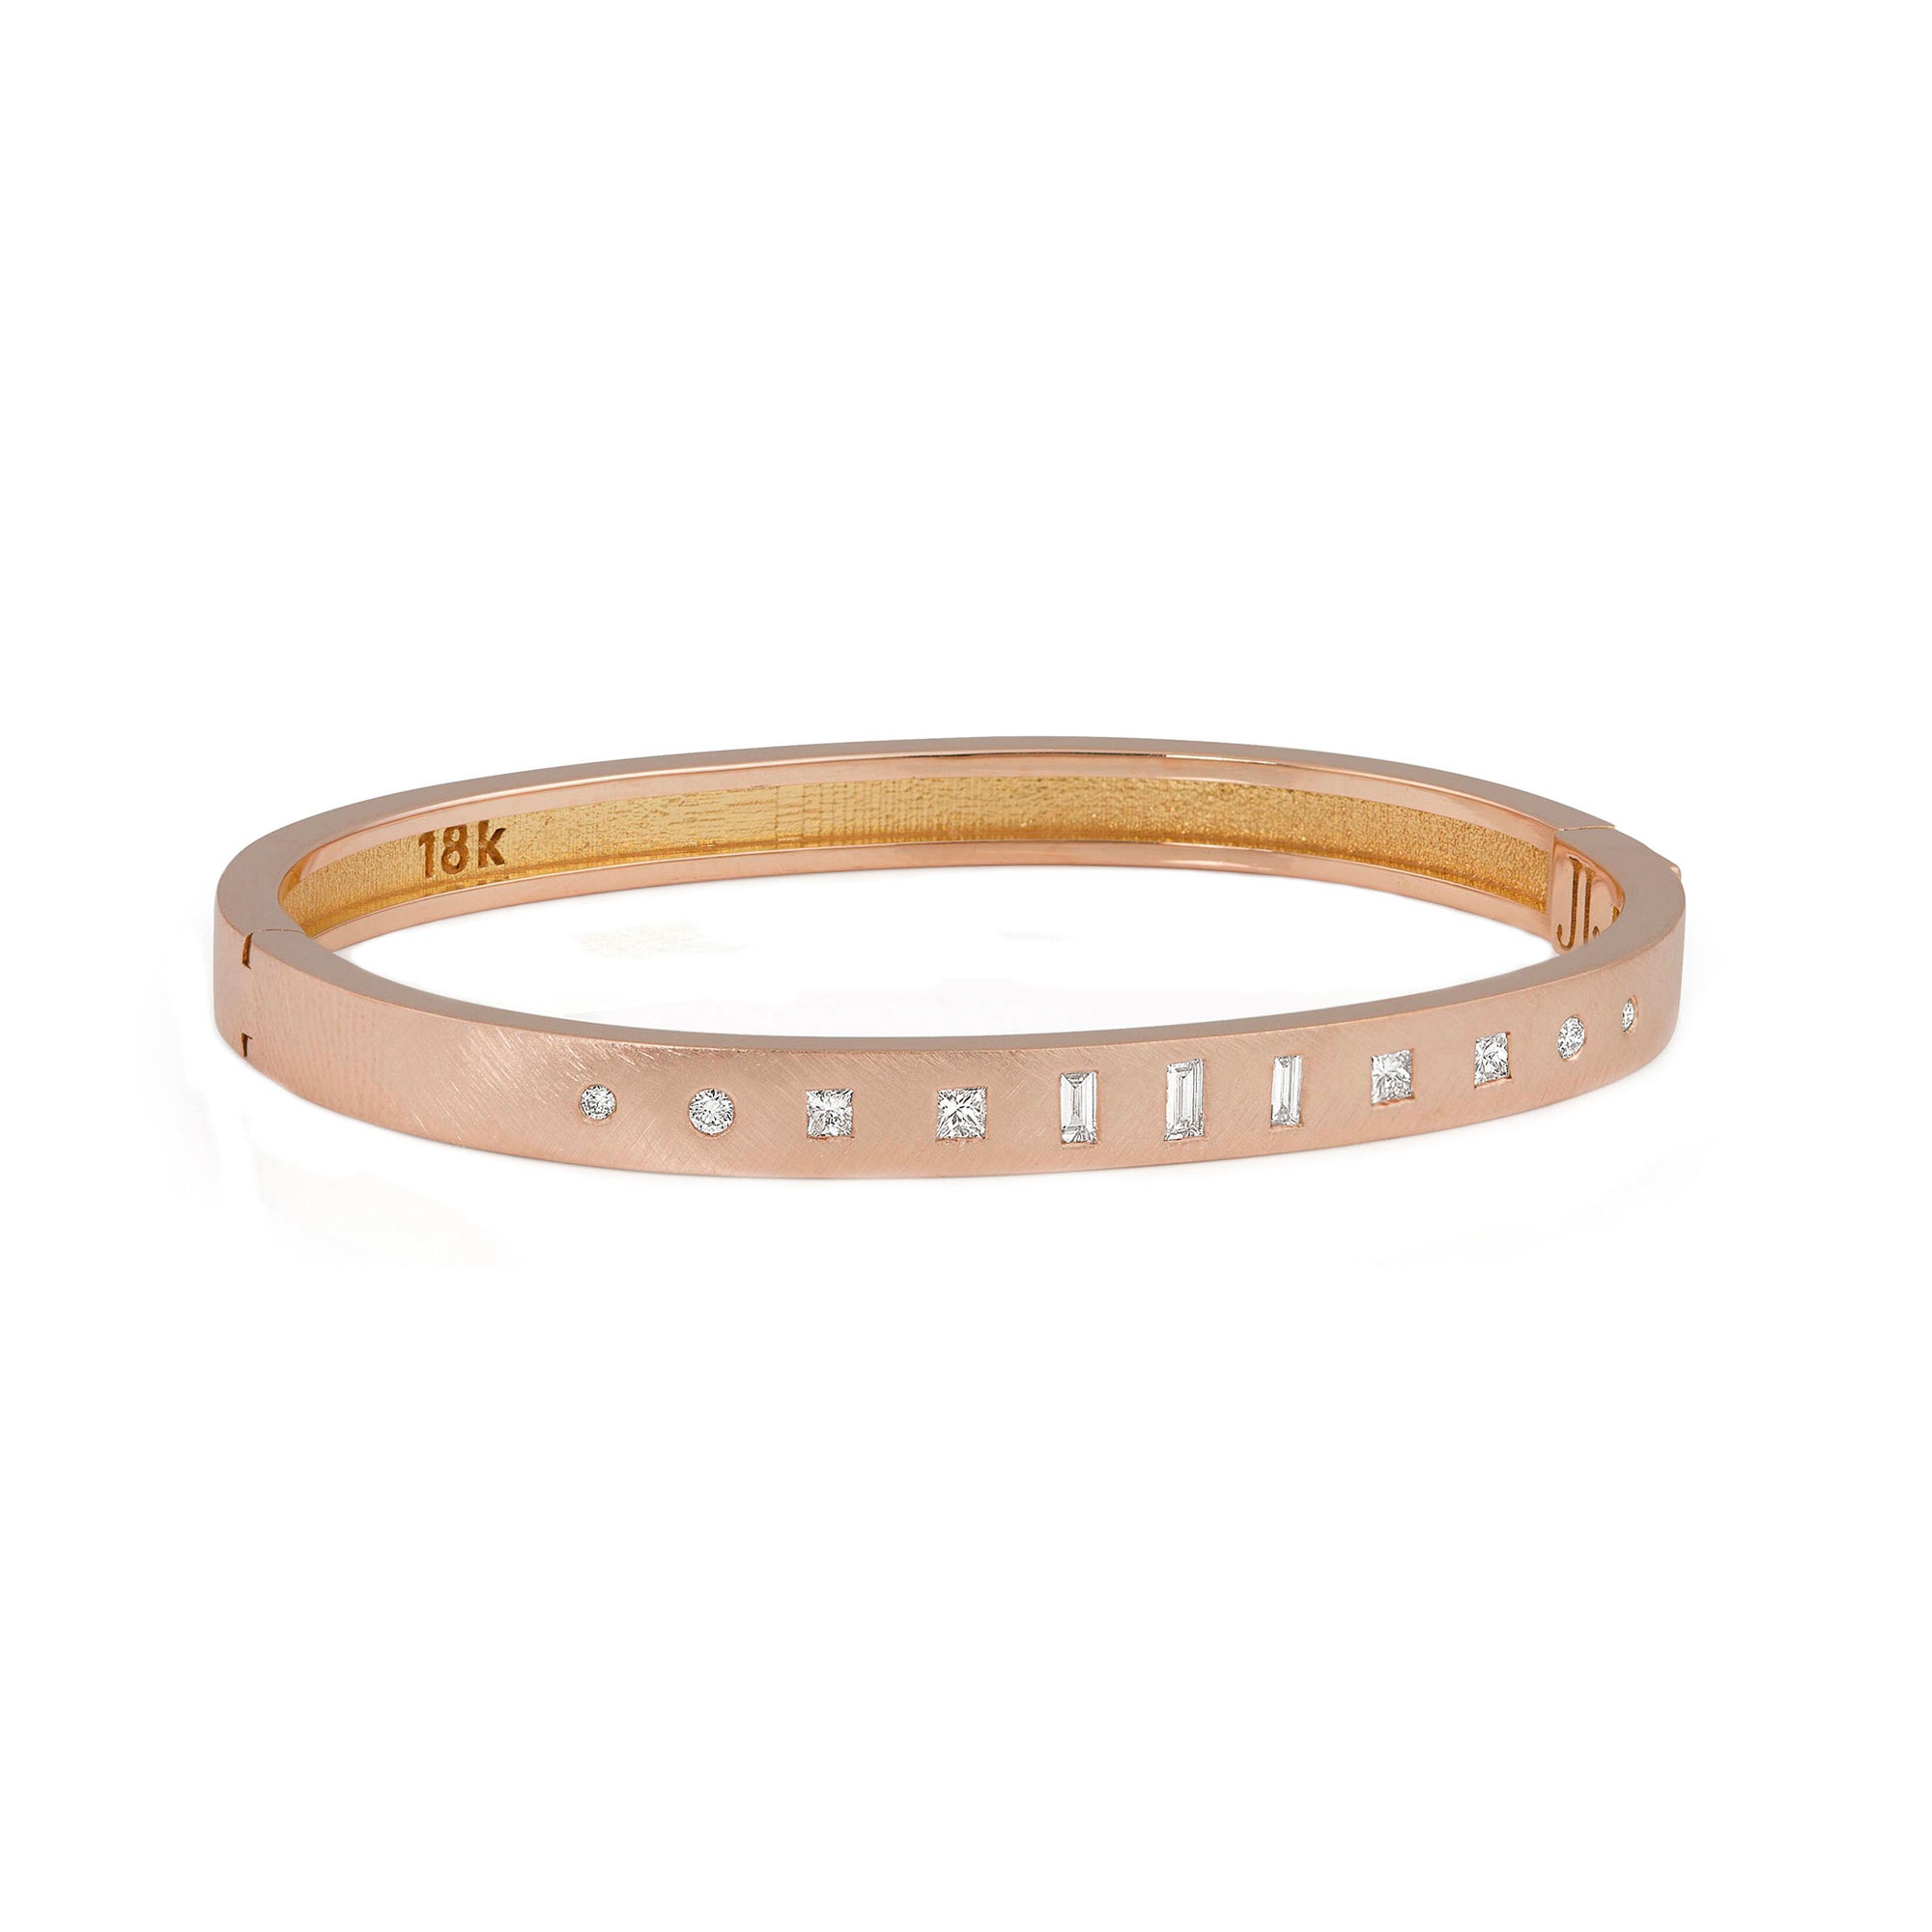 18k rose gold TUMI hinged cuff bracelet with mixed white diamonds